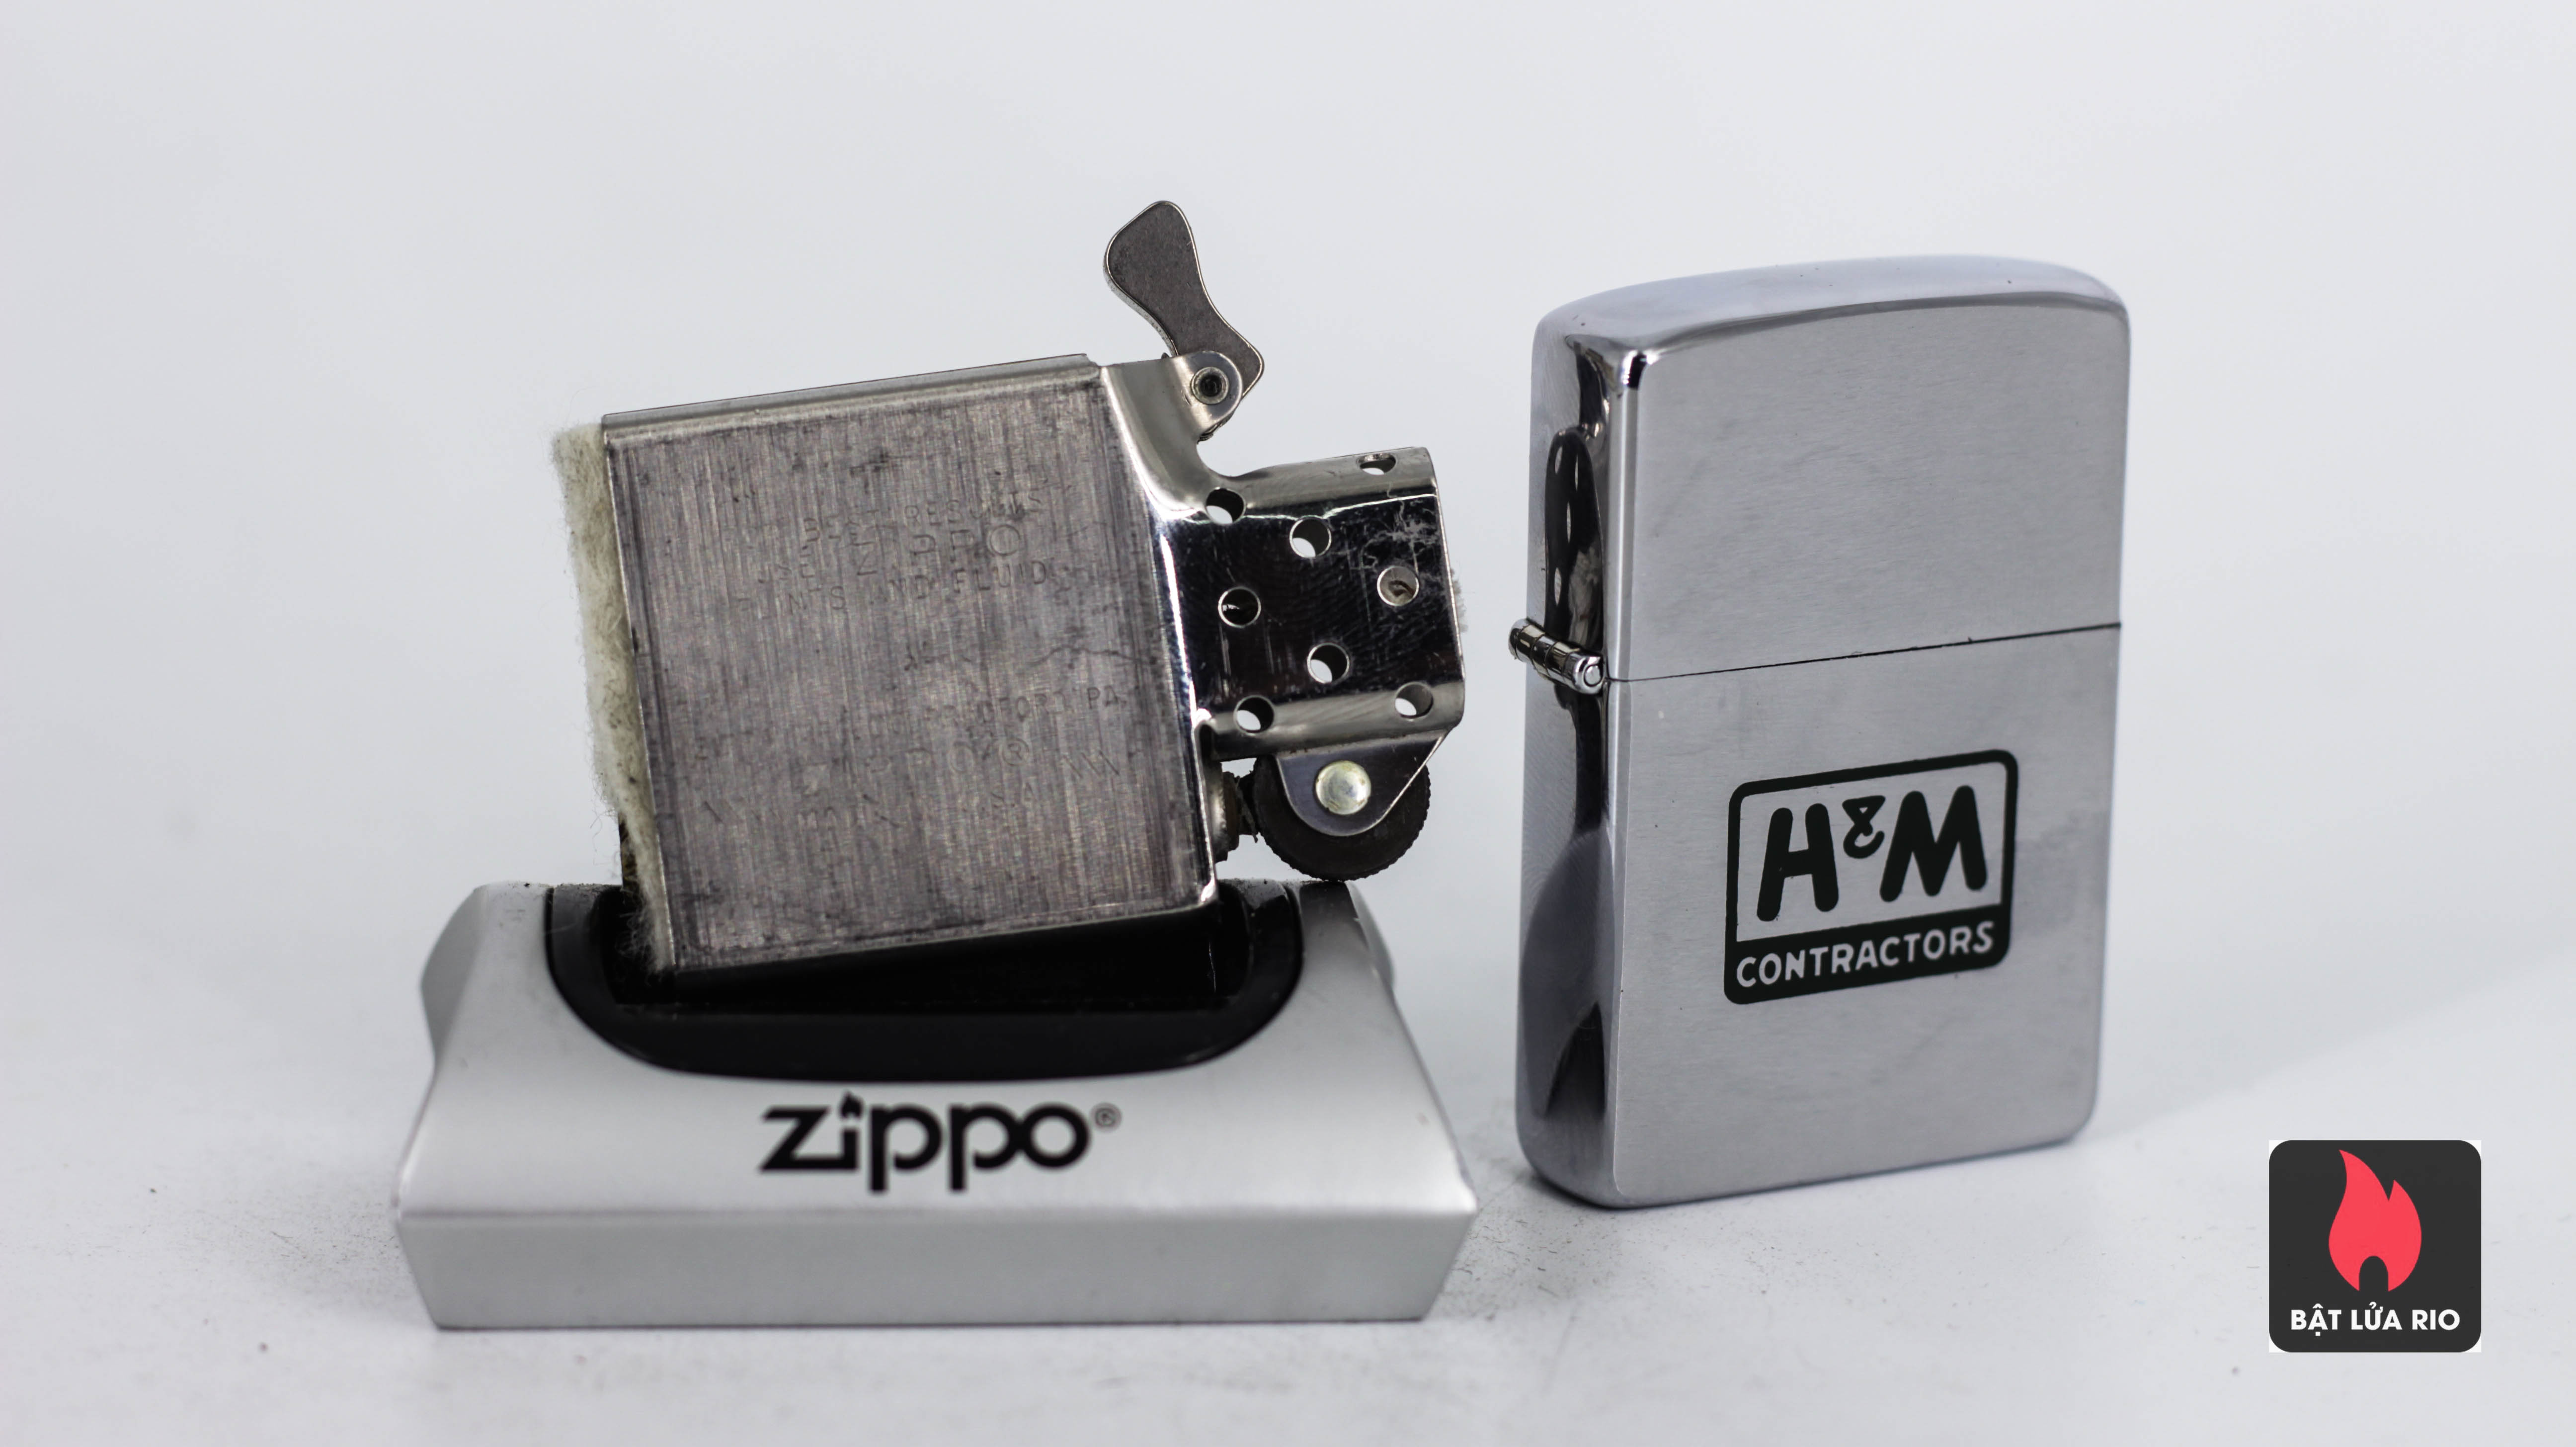 ZIPPO 1983 - H&M CONTRACTORS